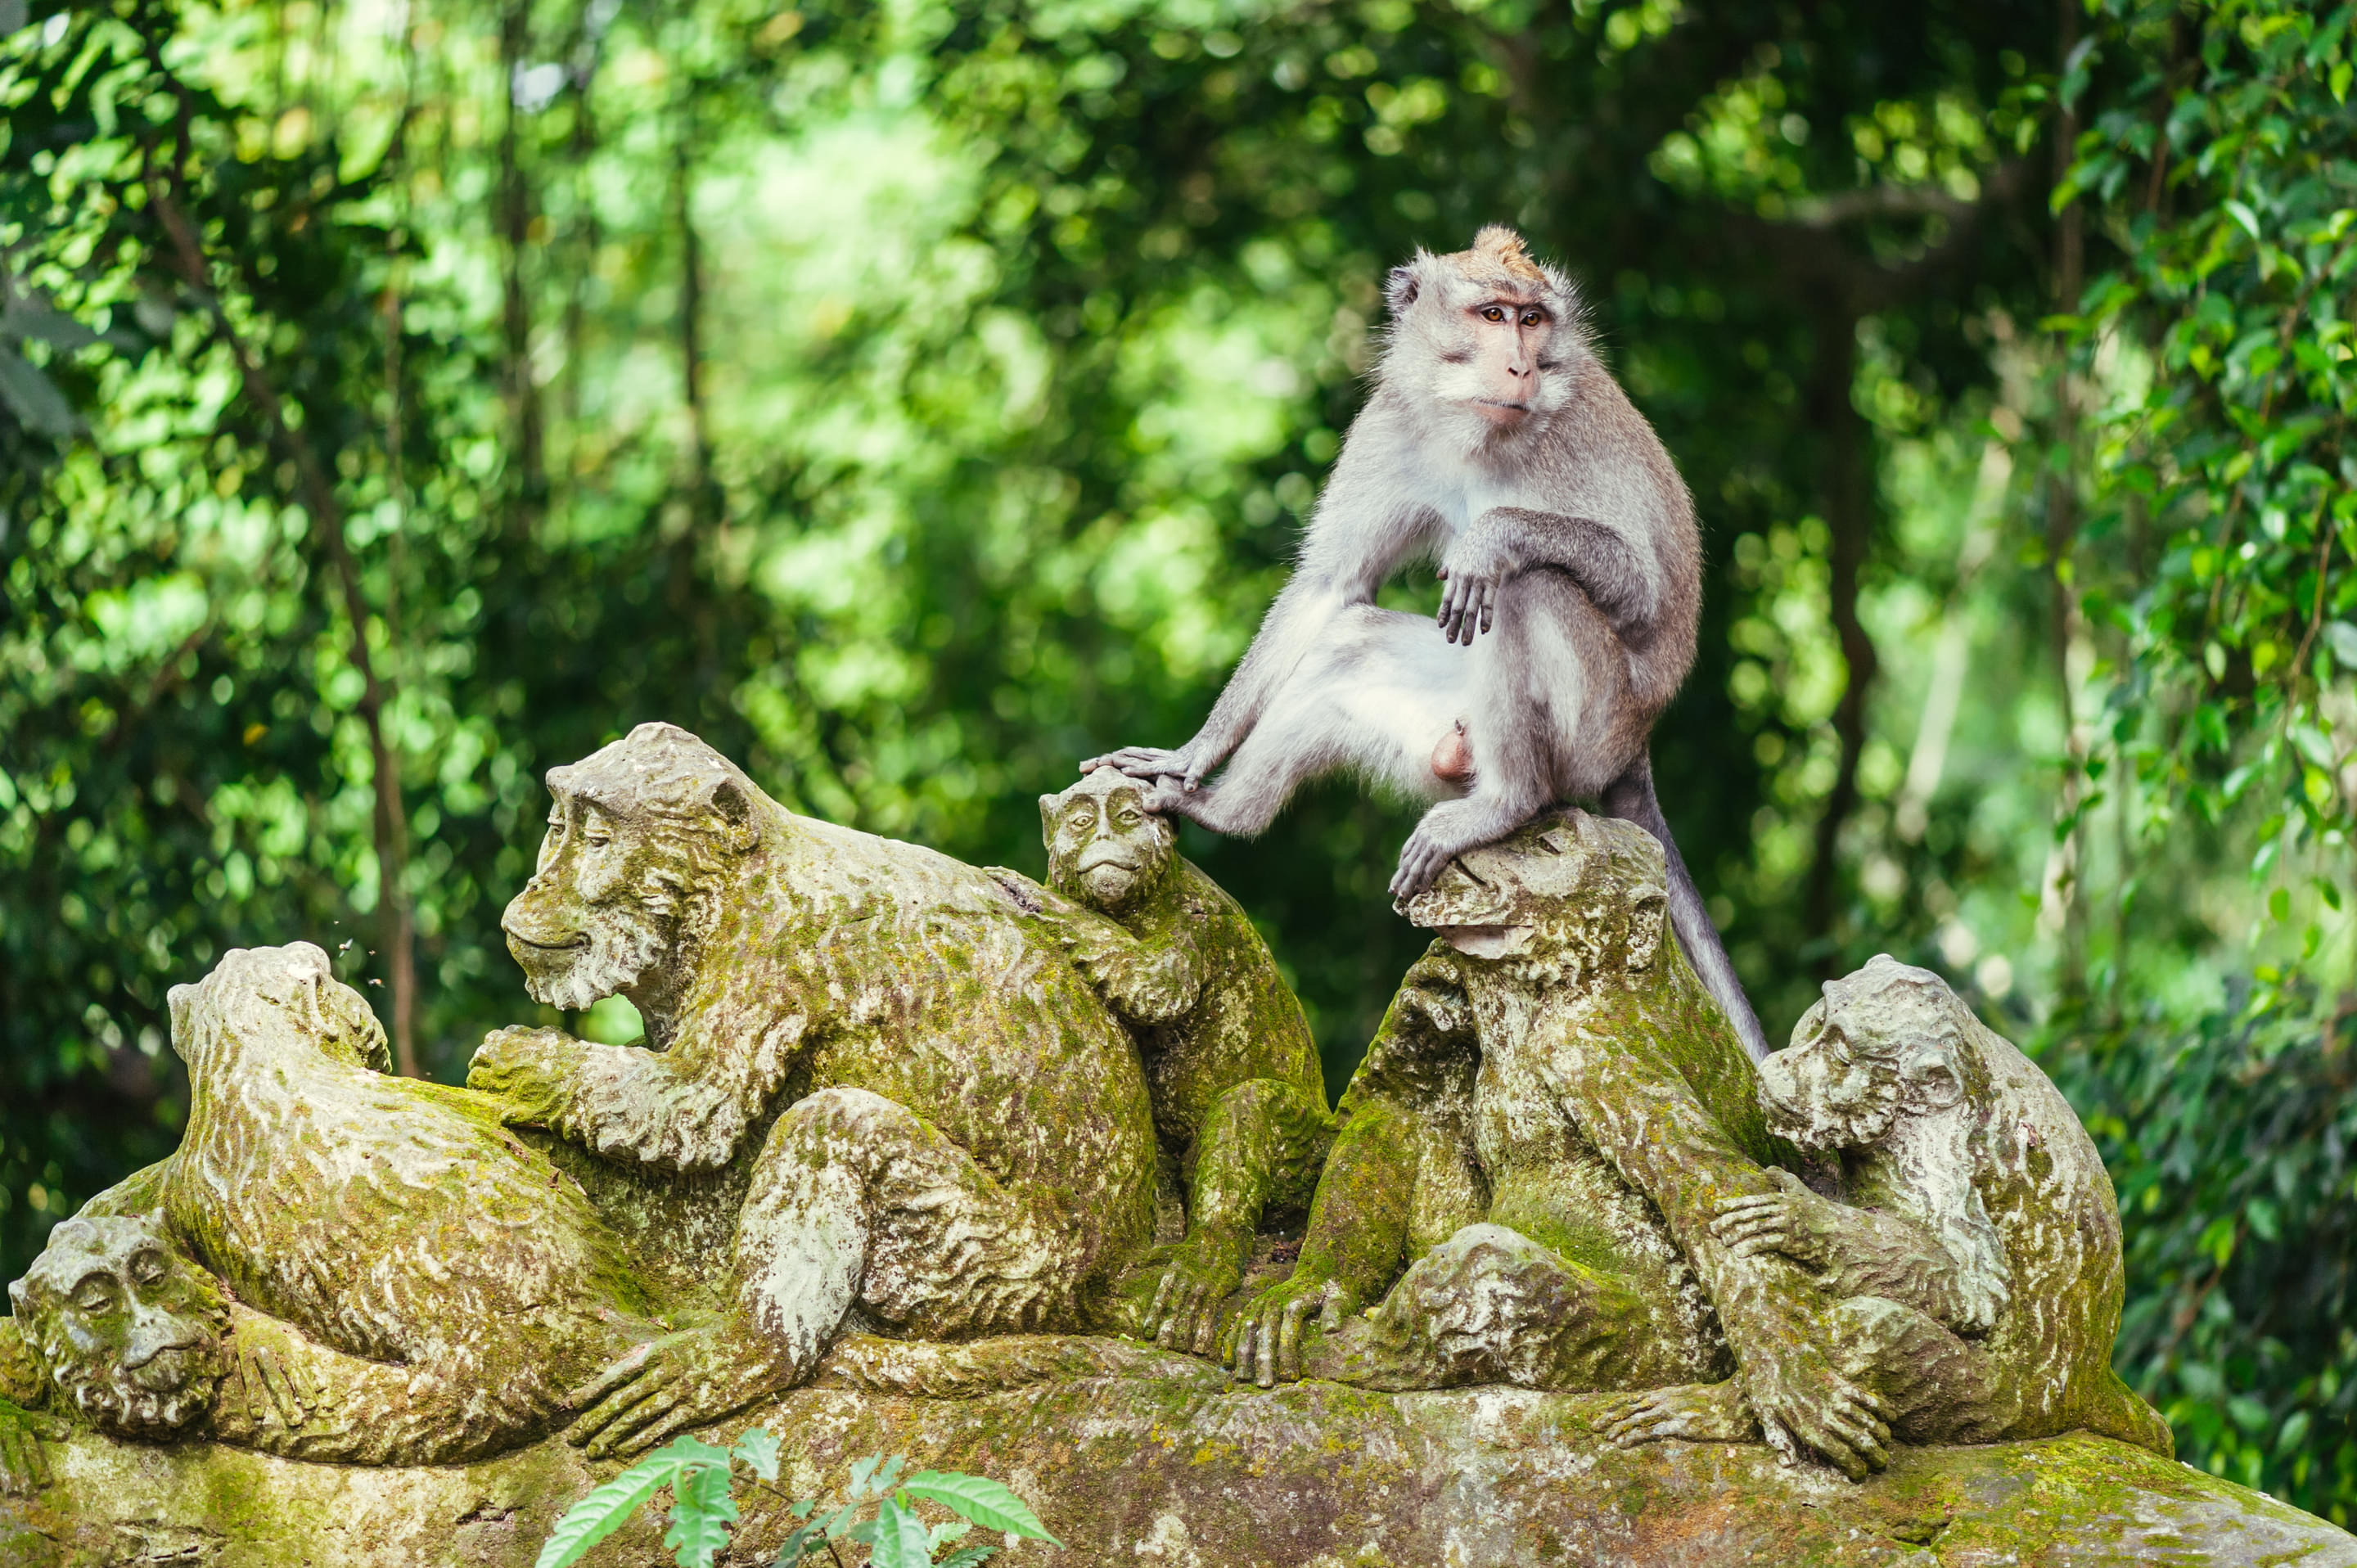 Ubud Monkey Forest Overview